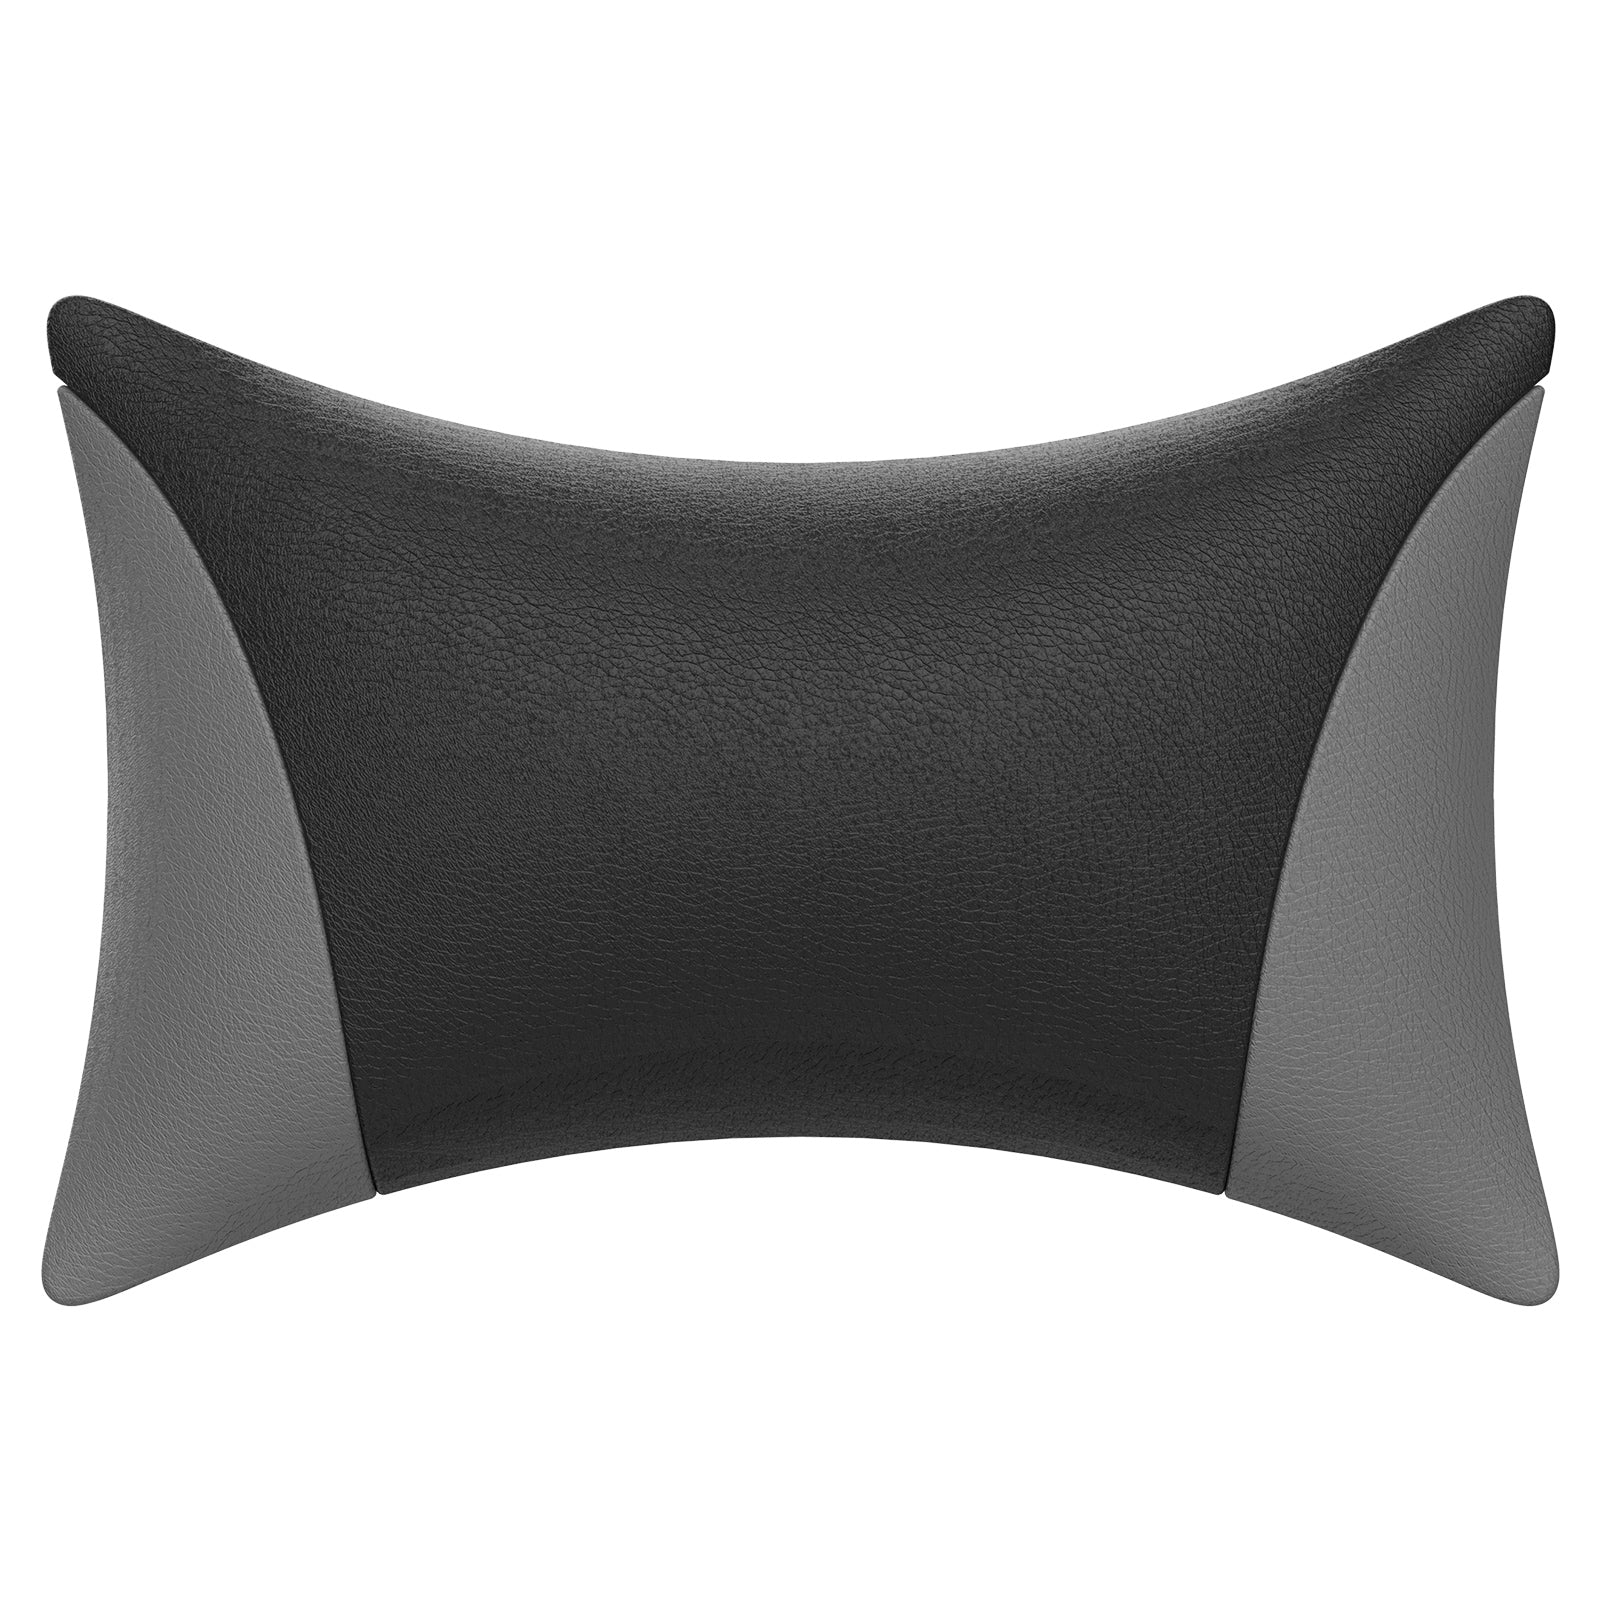 DXRACER gaming chair headrest and waistrest original U-shaped neck pillow  Internet cafe headrest and waist cushion car cushion